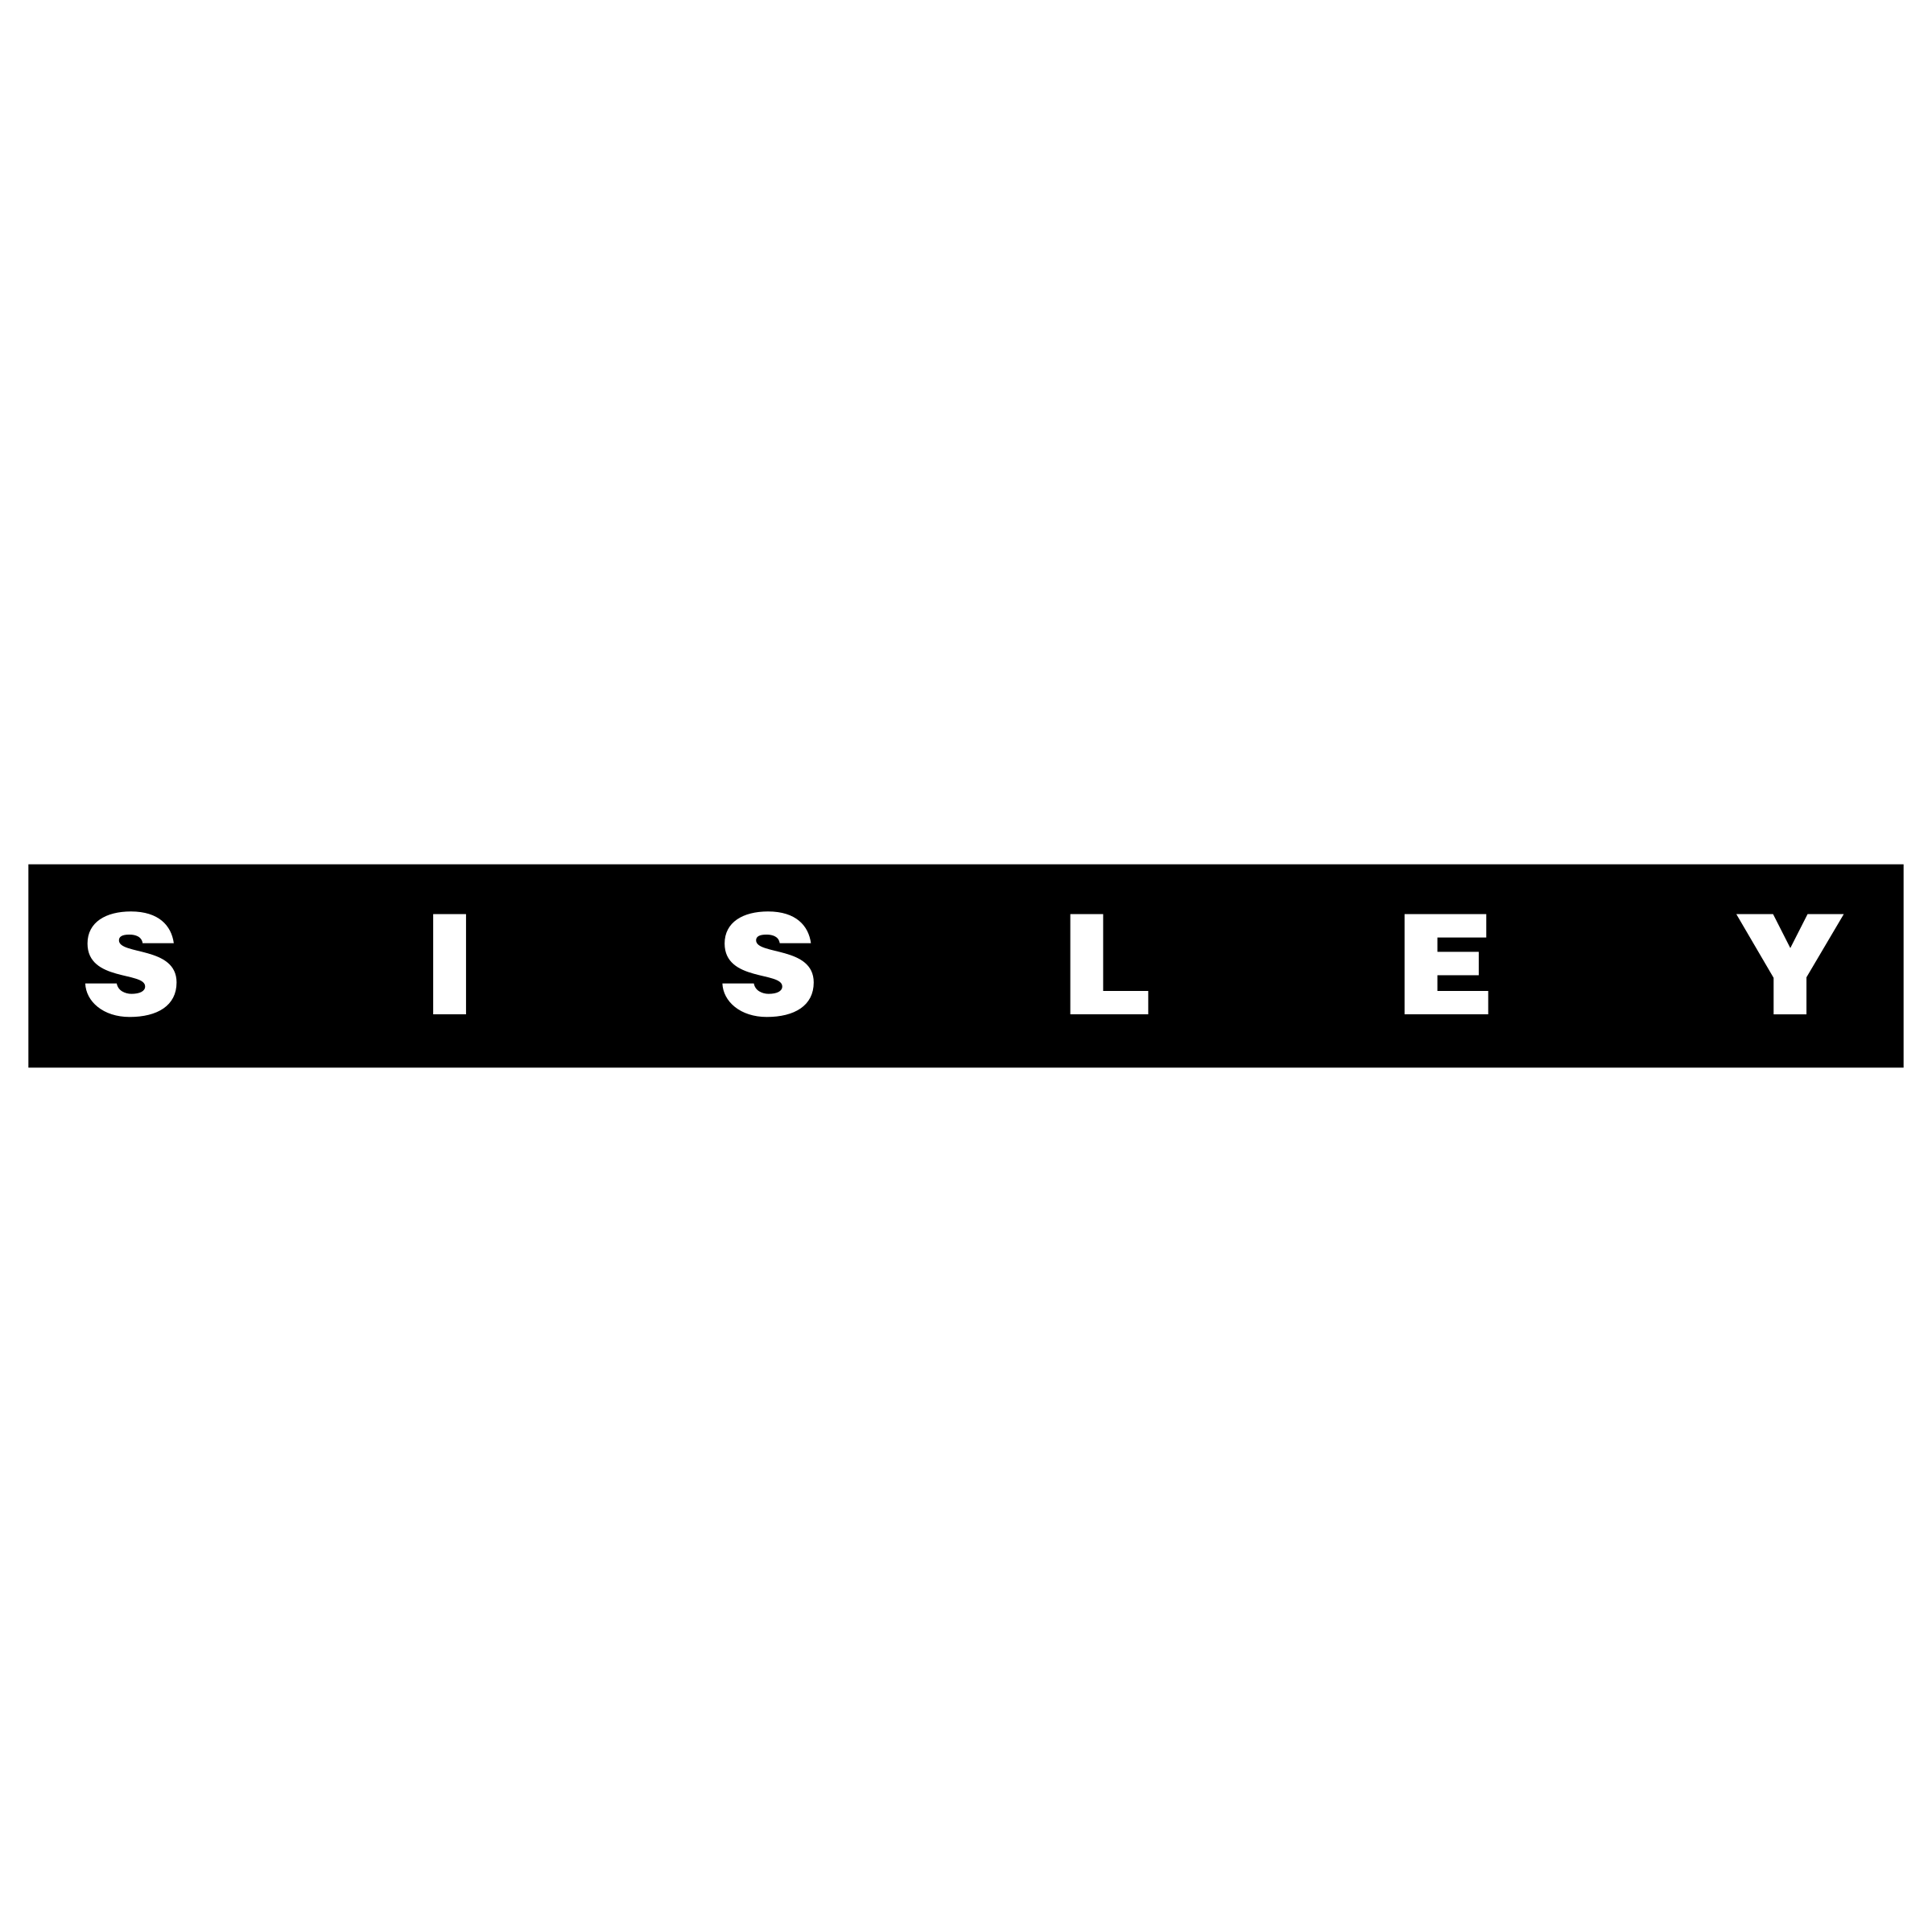 Sisley Logo - Sisley Logo PNG Transparent & SVG Vector - Freebie Supply